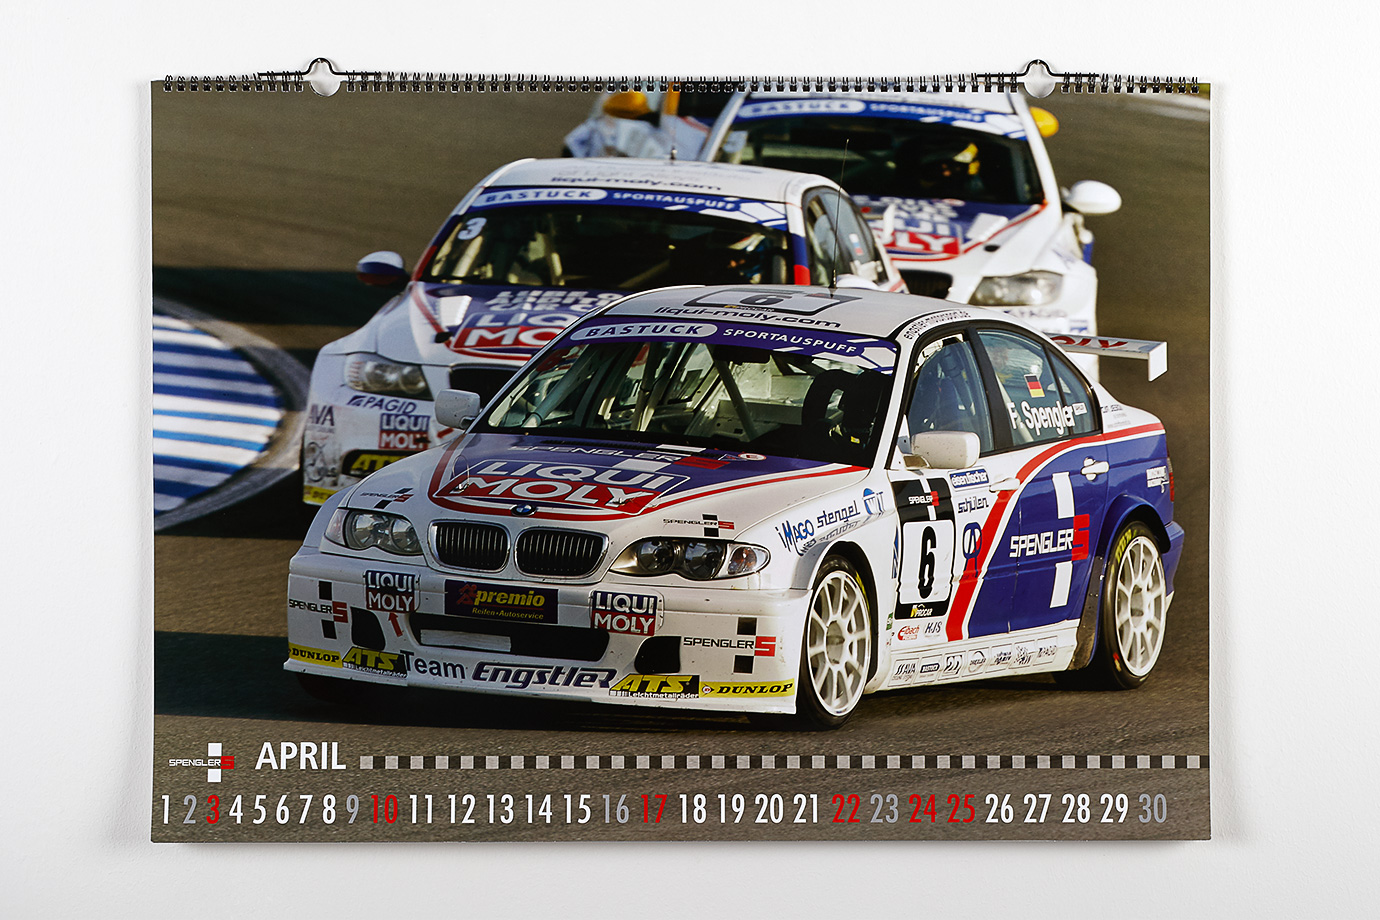 Jahreskalender mit Rennsportmotiven, Monatsblatt April